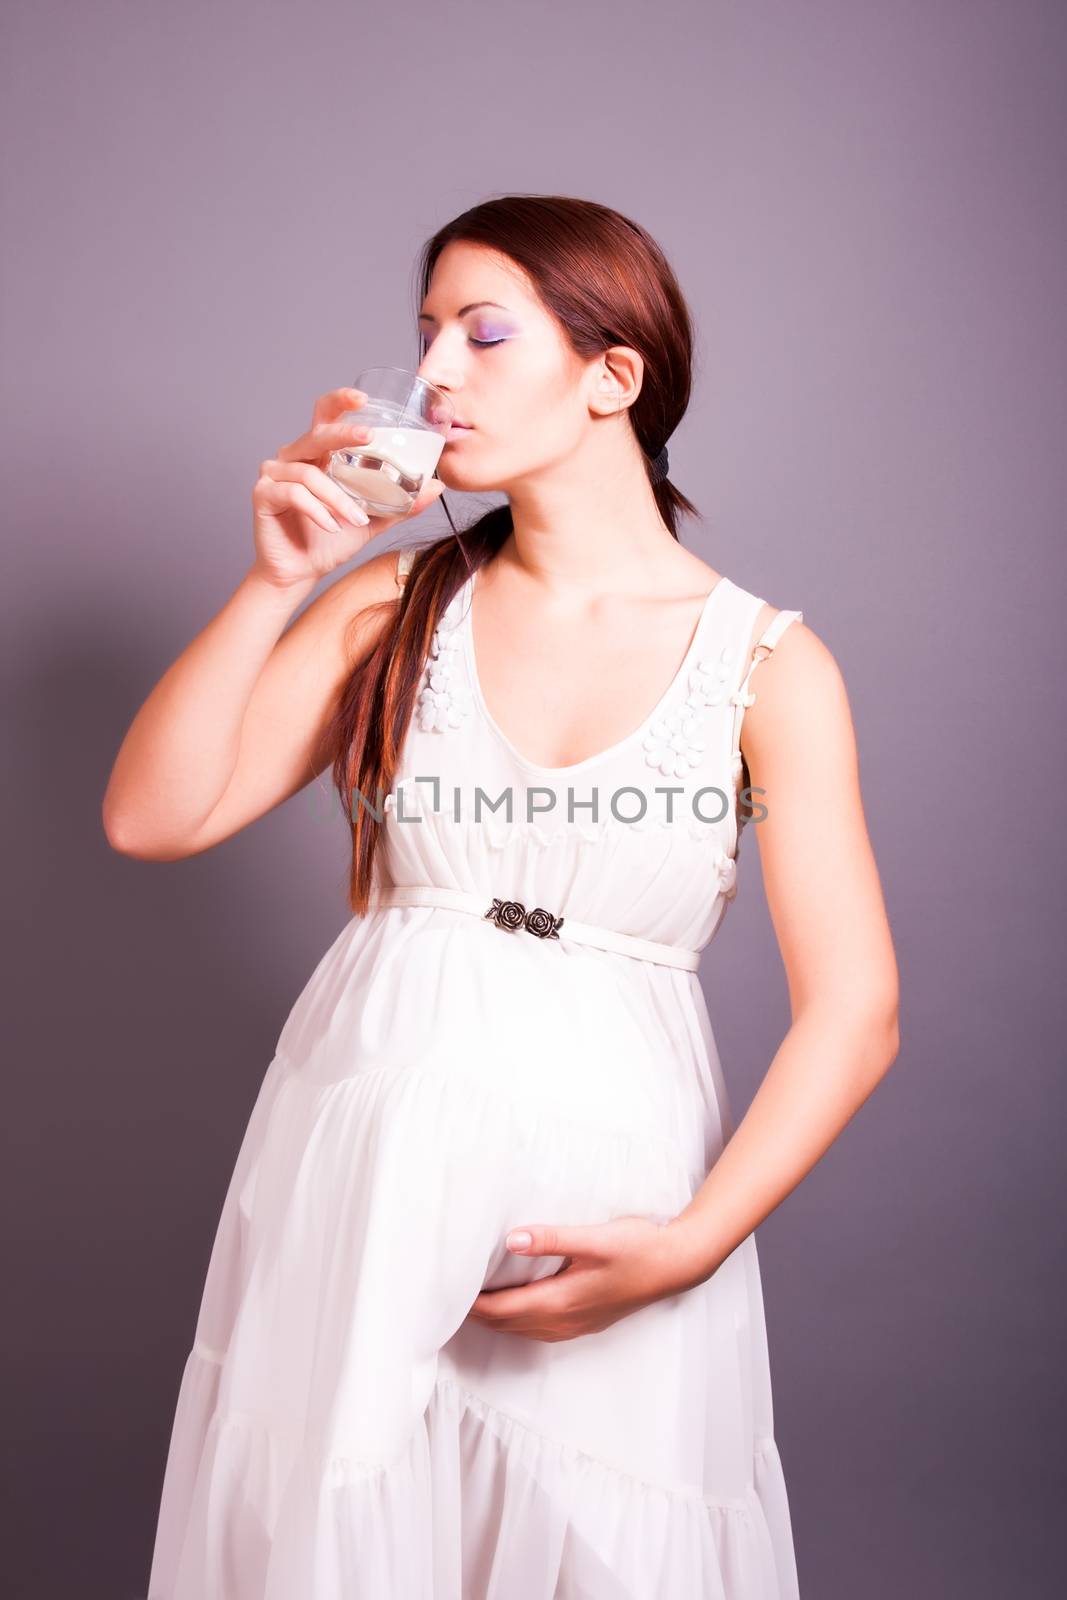 Pregnant woman drinking milk by dukibu